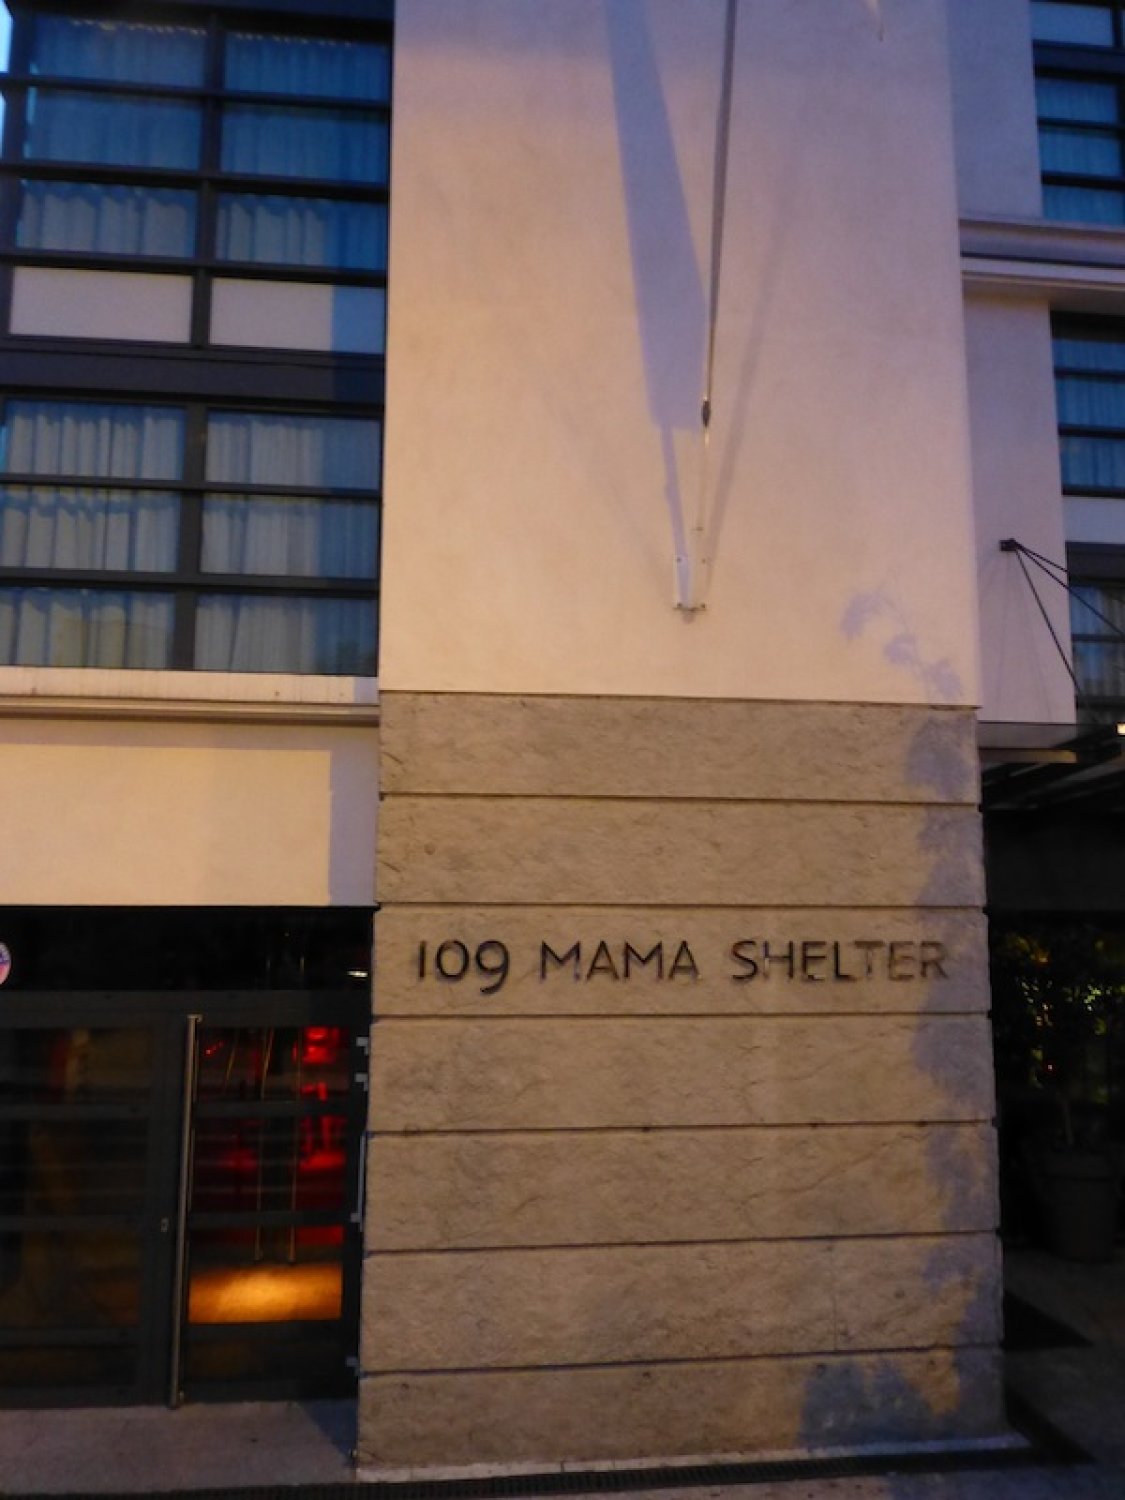 Mama Shelter